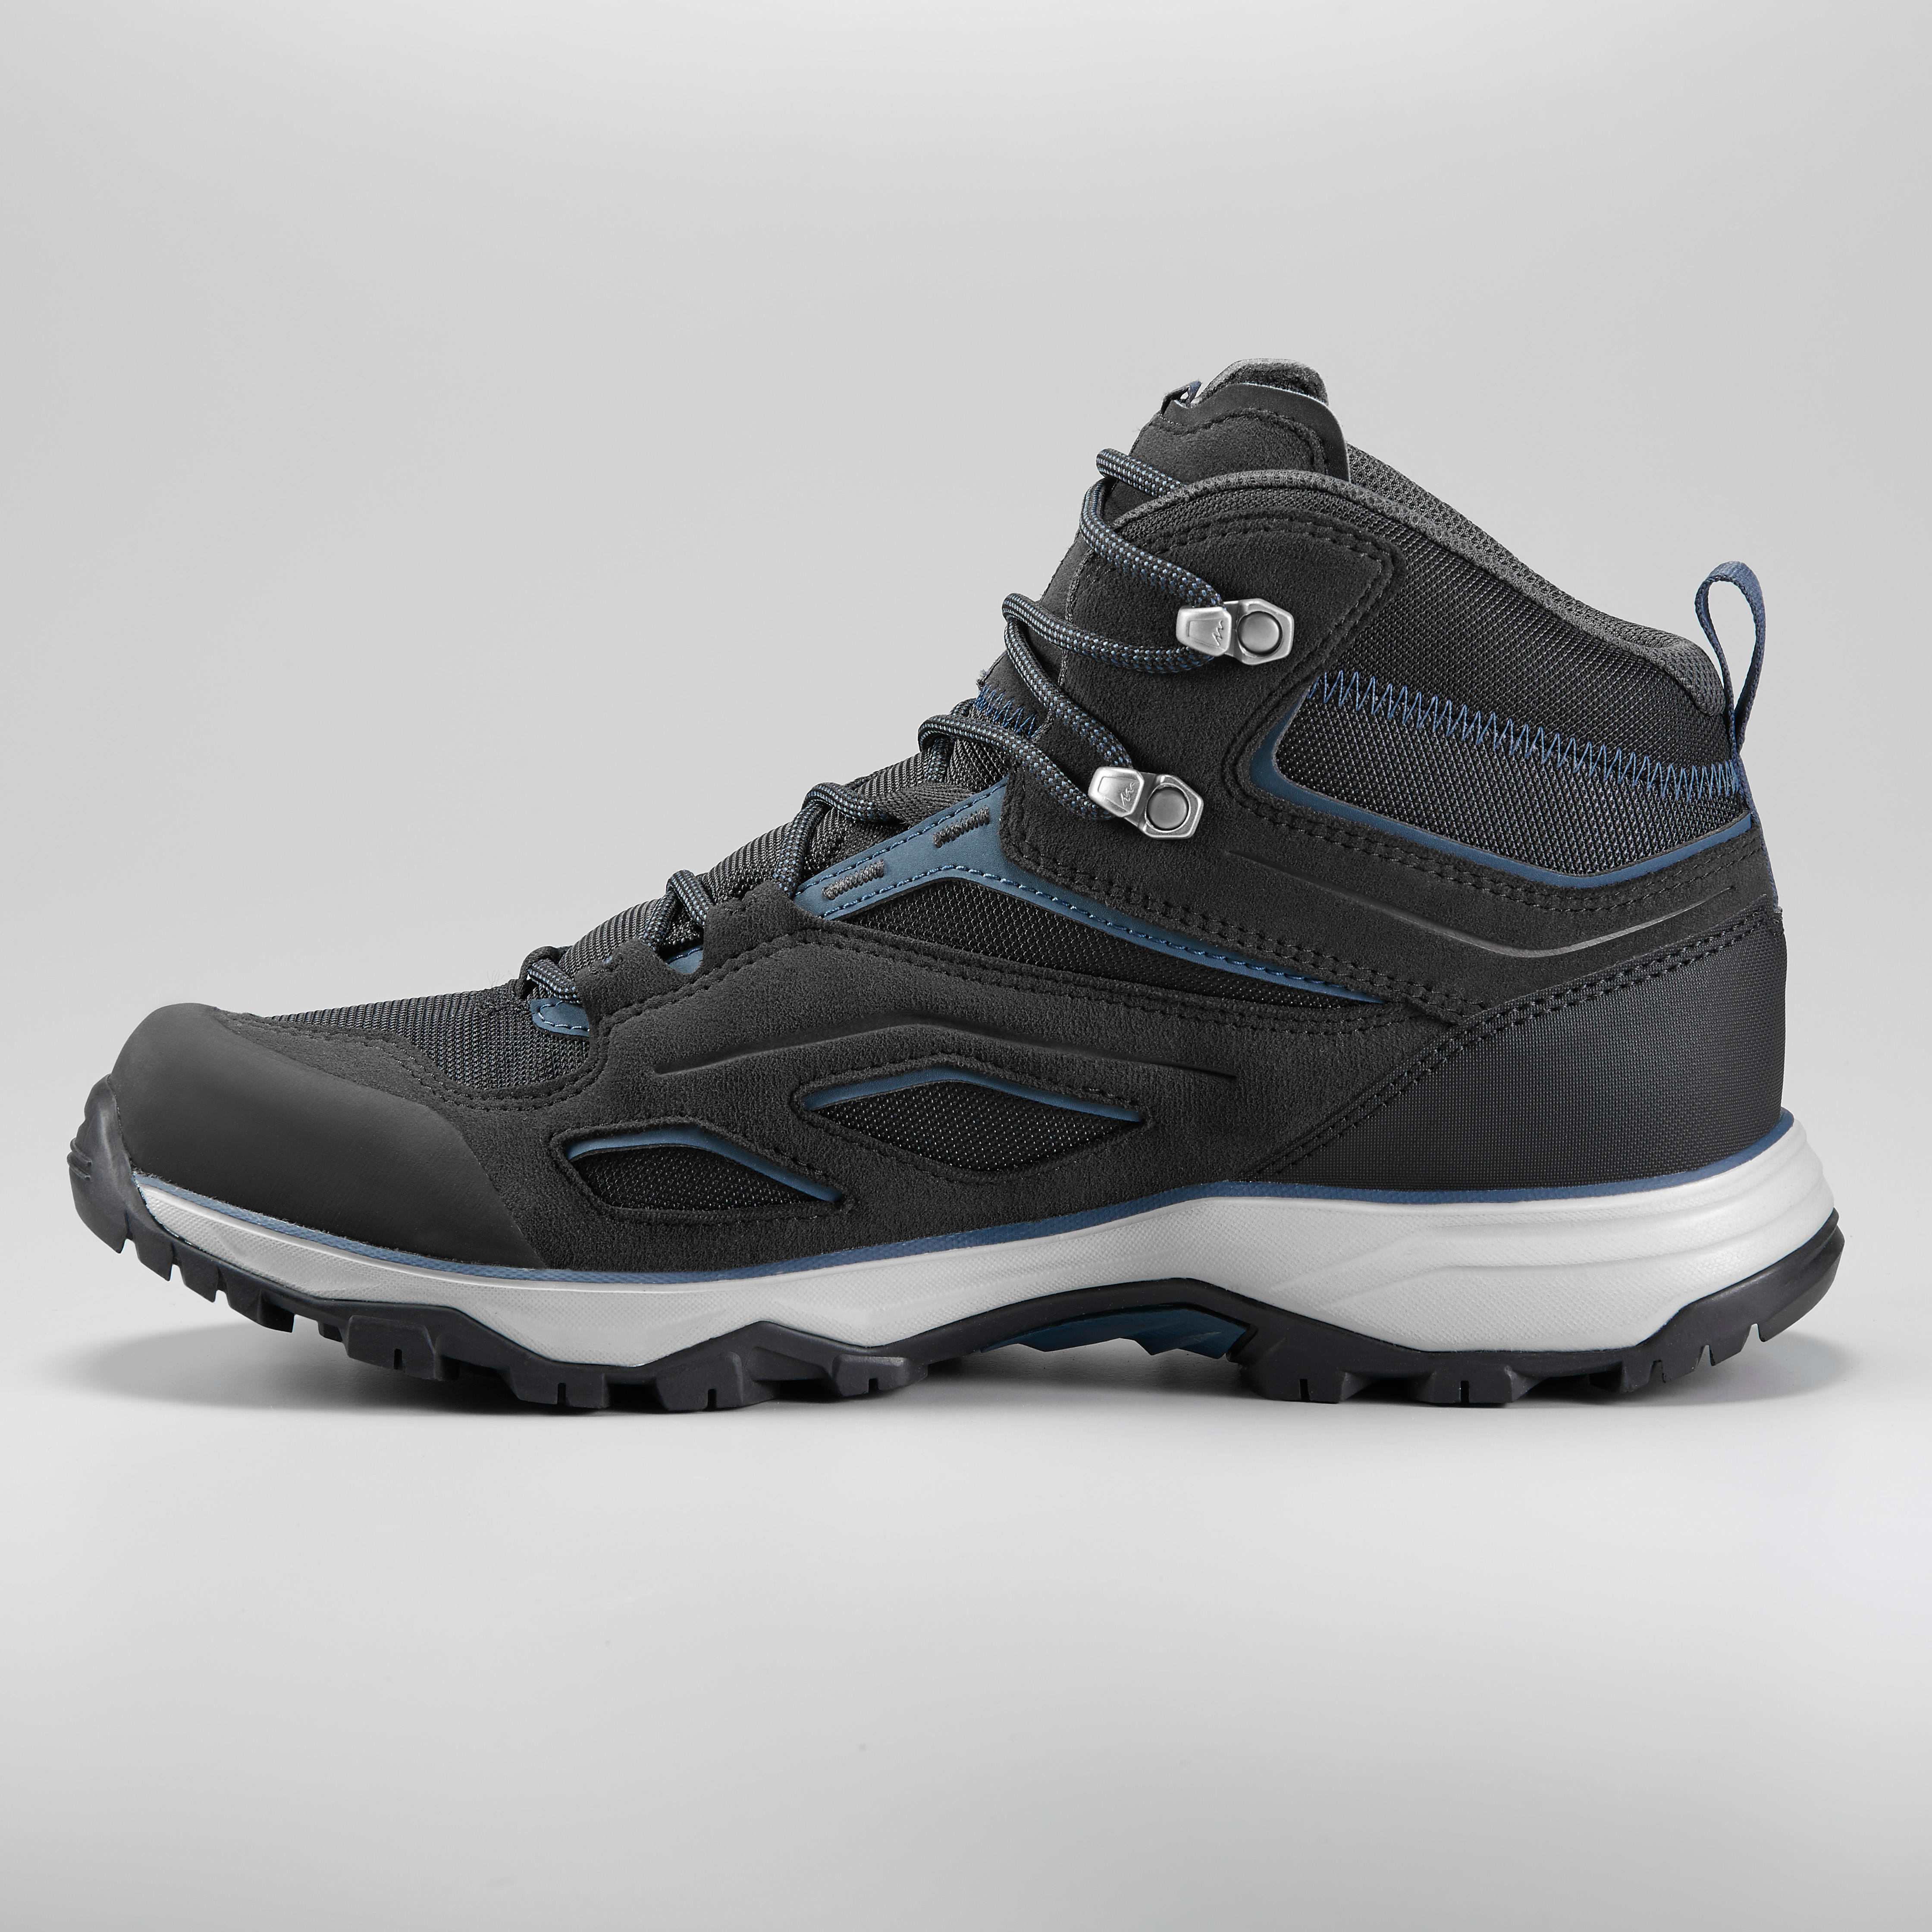 Men's Waterproof Hiking Shoes - MH 100 Black - QUECHUA